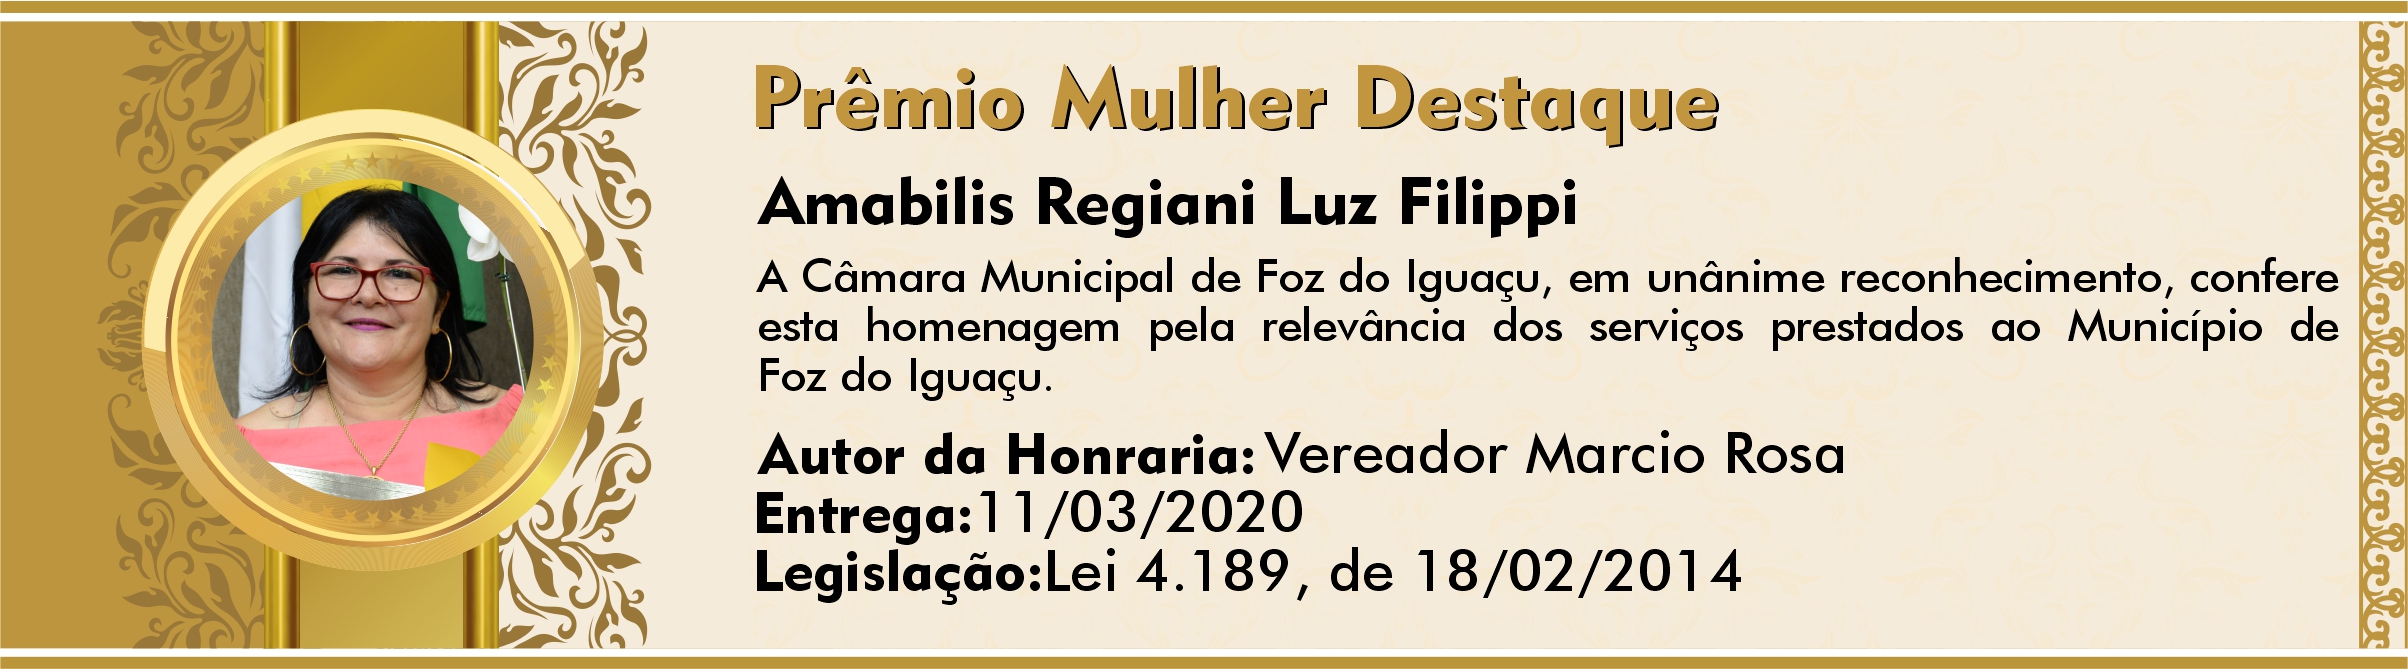 Amabilis Regiani Luz Filippi